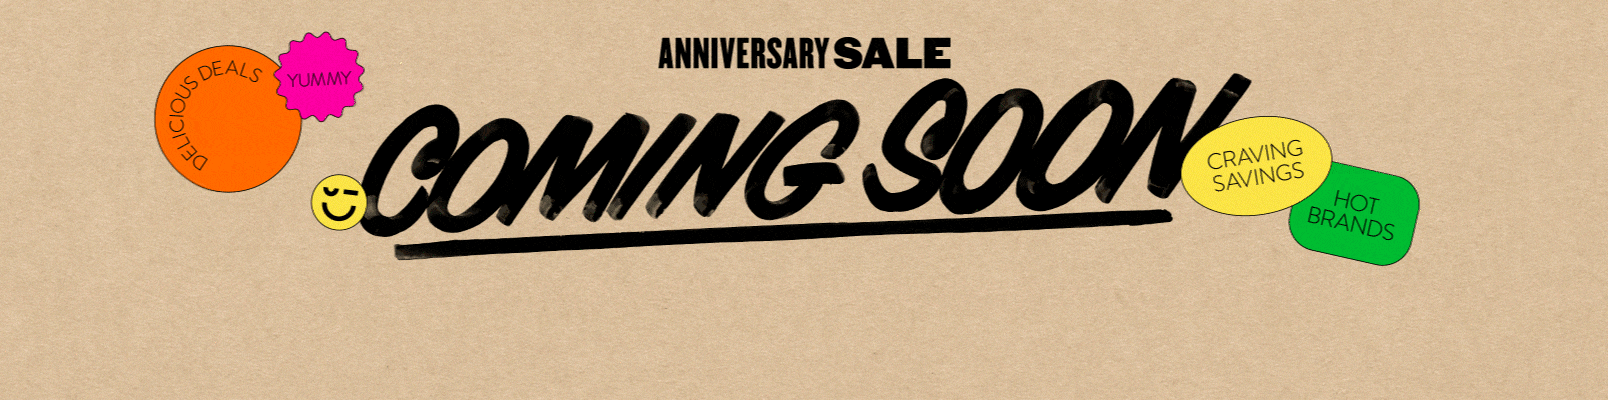 Anniversary Sale: Coming Soon